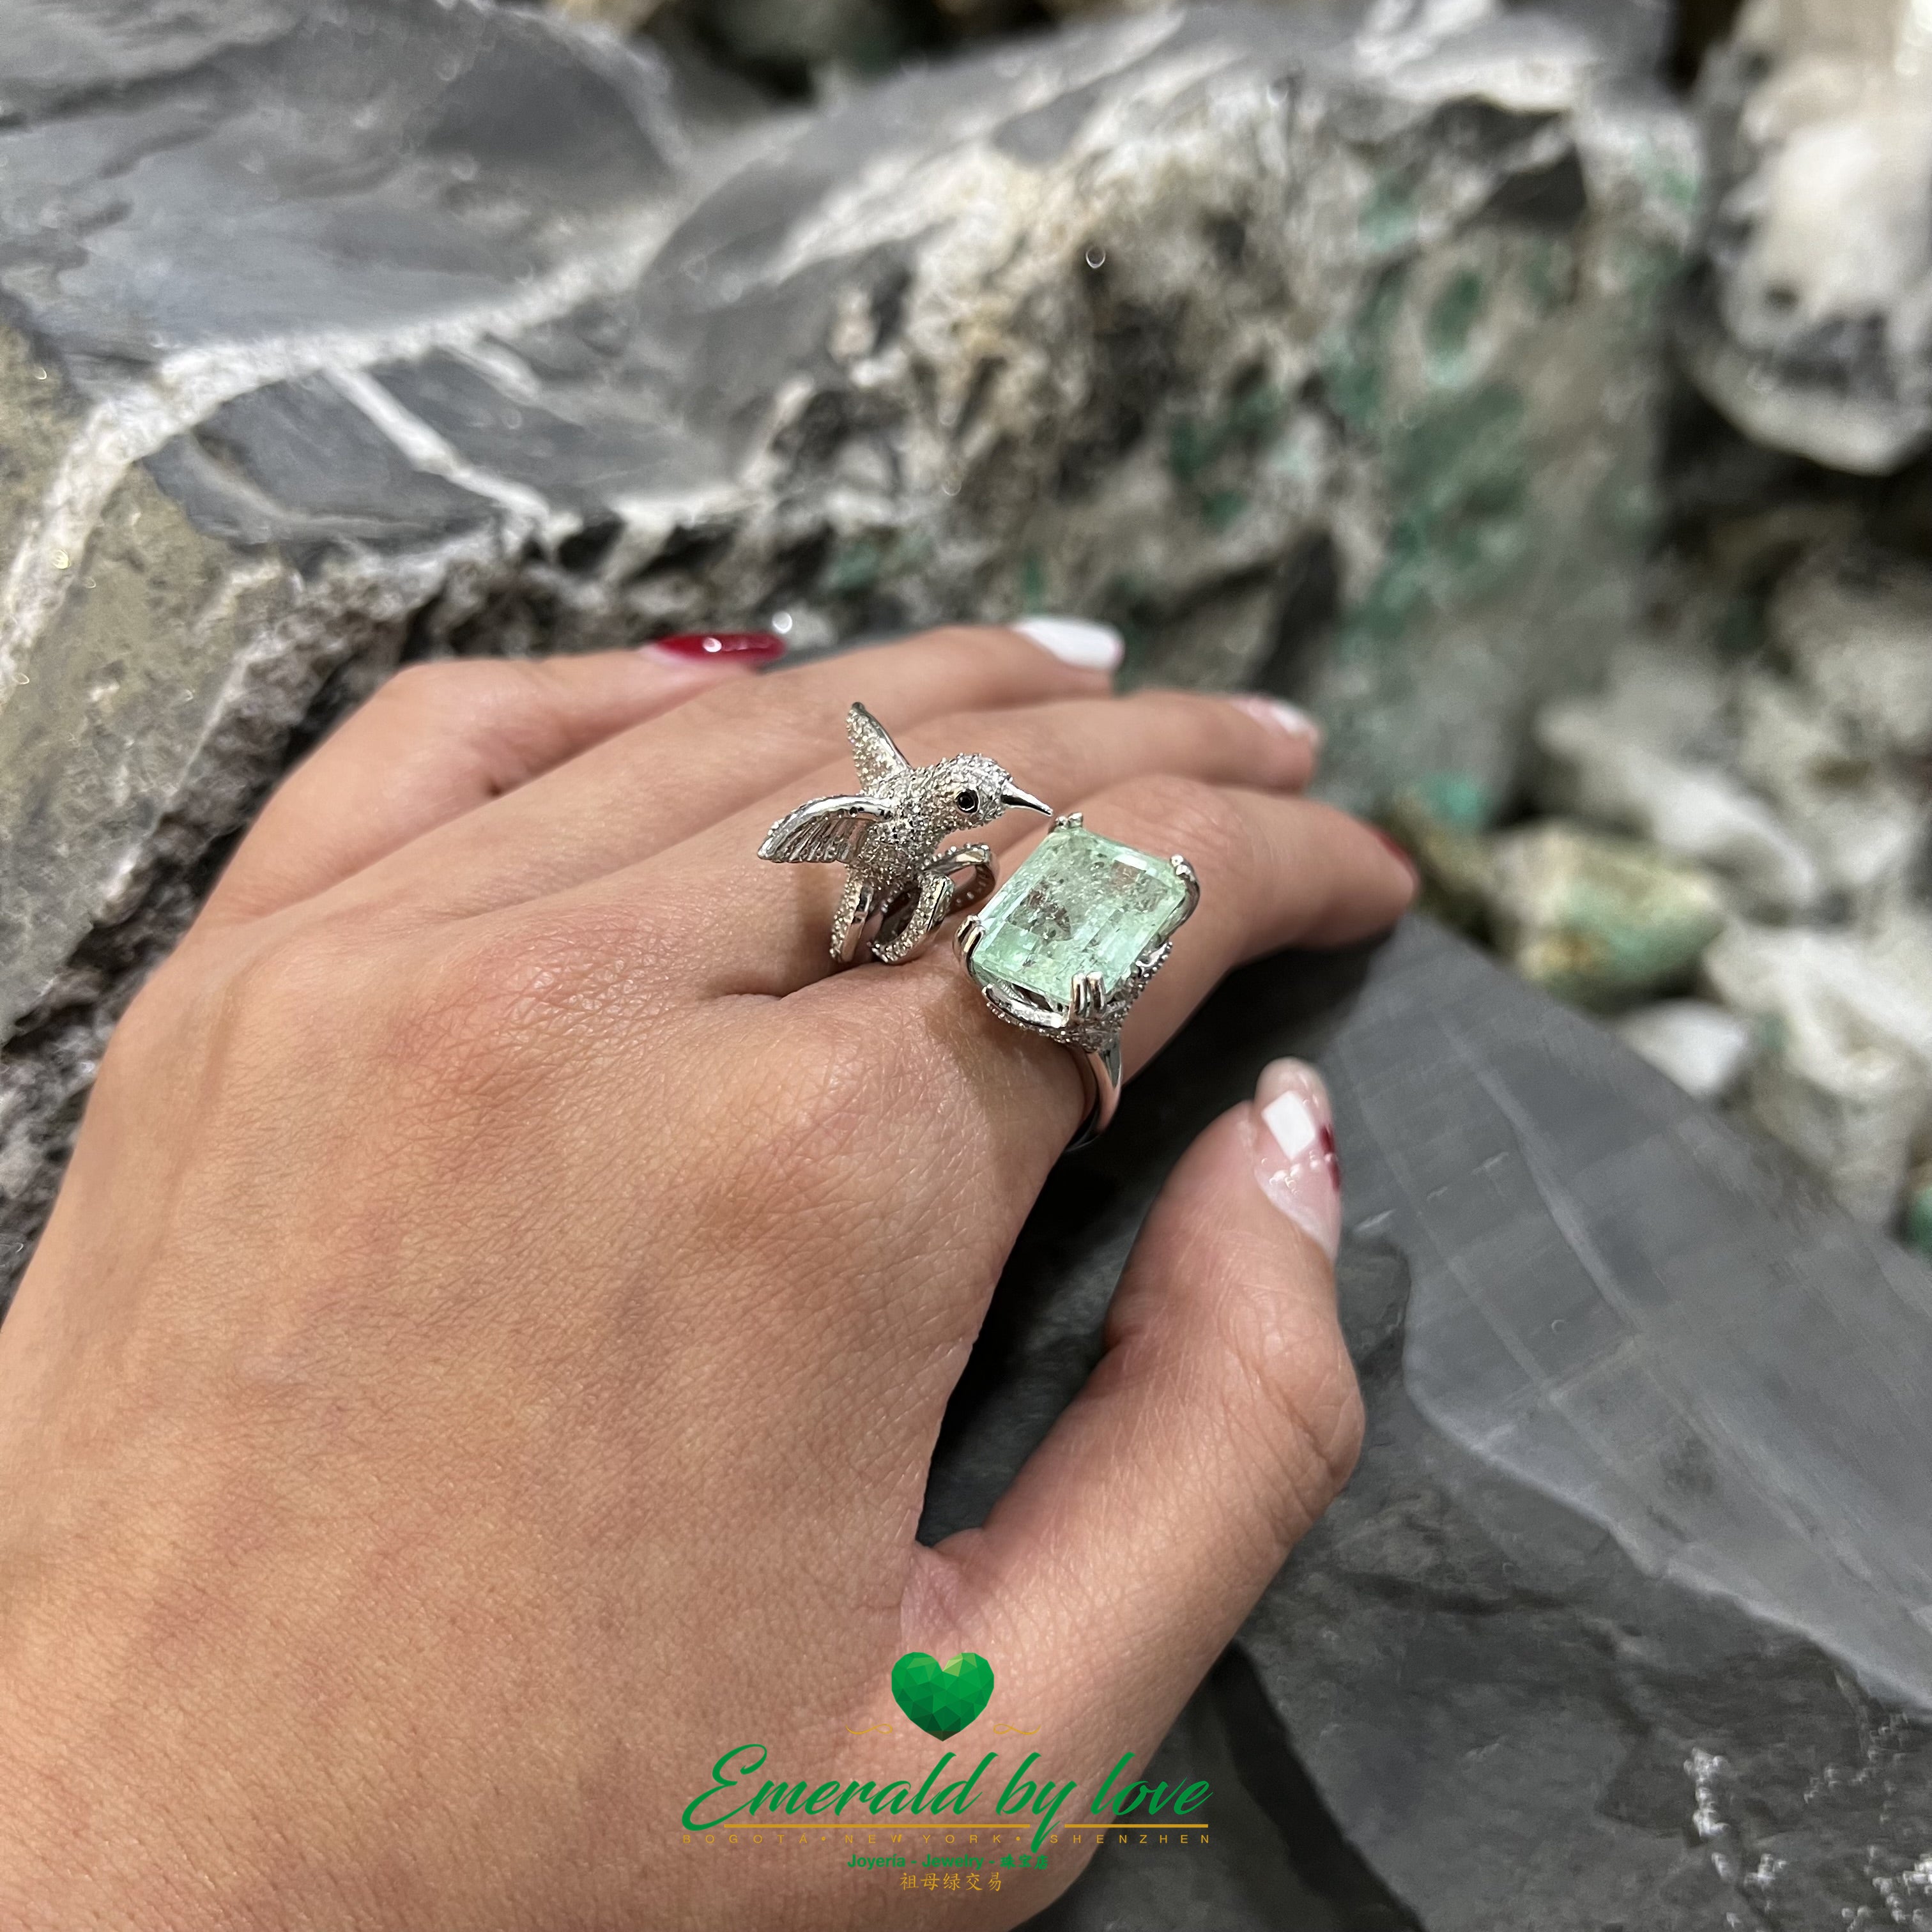 Spectacular Rectangular Emerald Crystal Ring with Hummingbird Accent